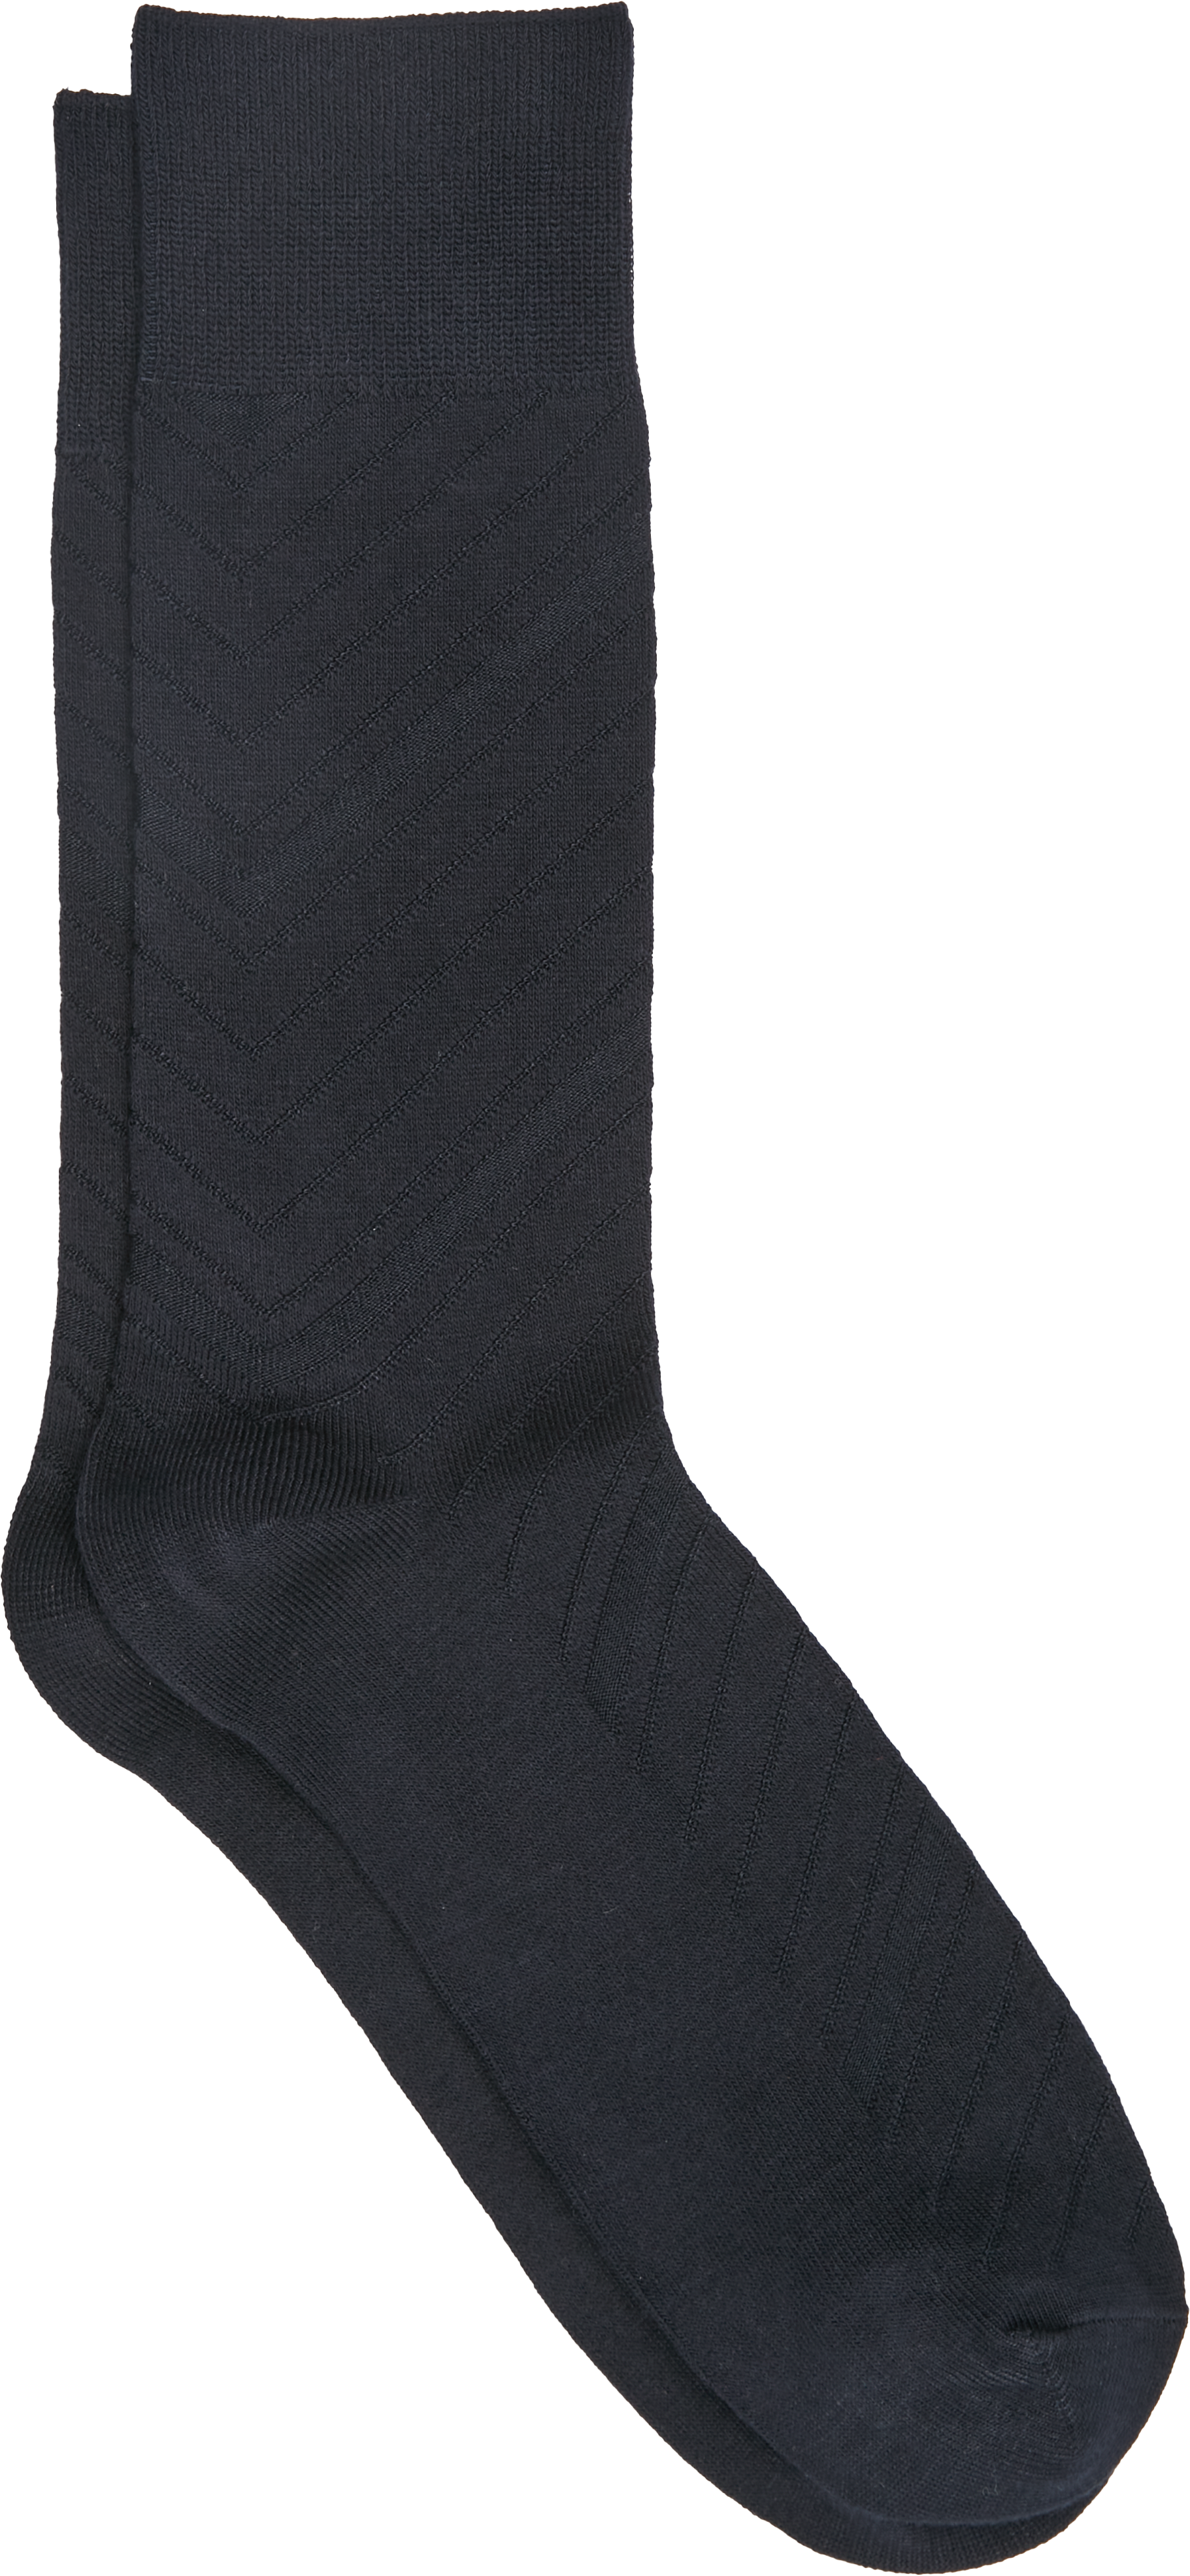 Pronto Uomo Socks, Blue Chevron - Men's Accessories | Men's Wearhouse